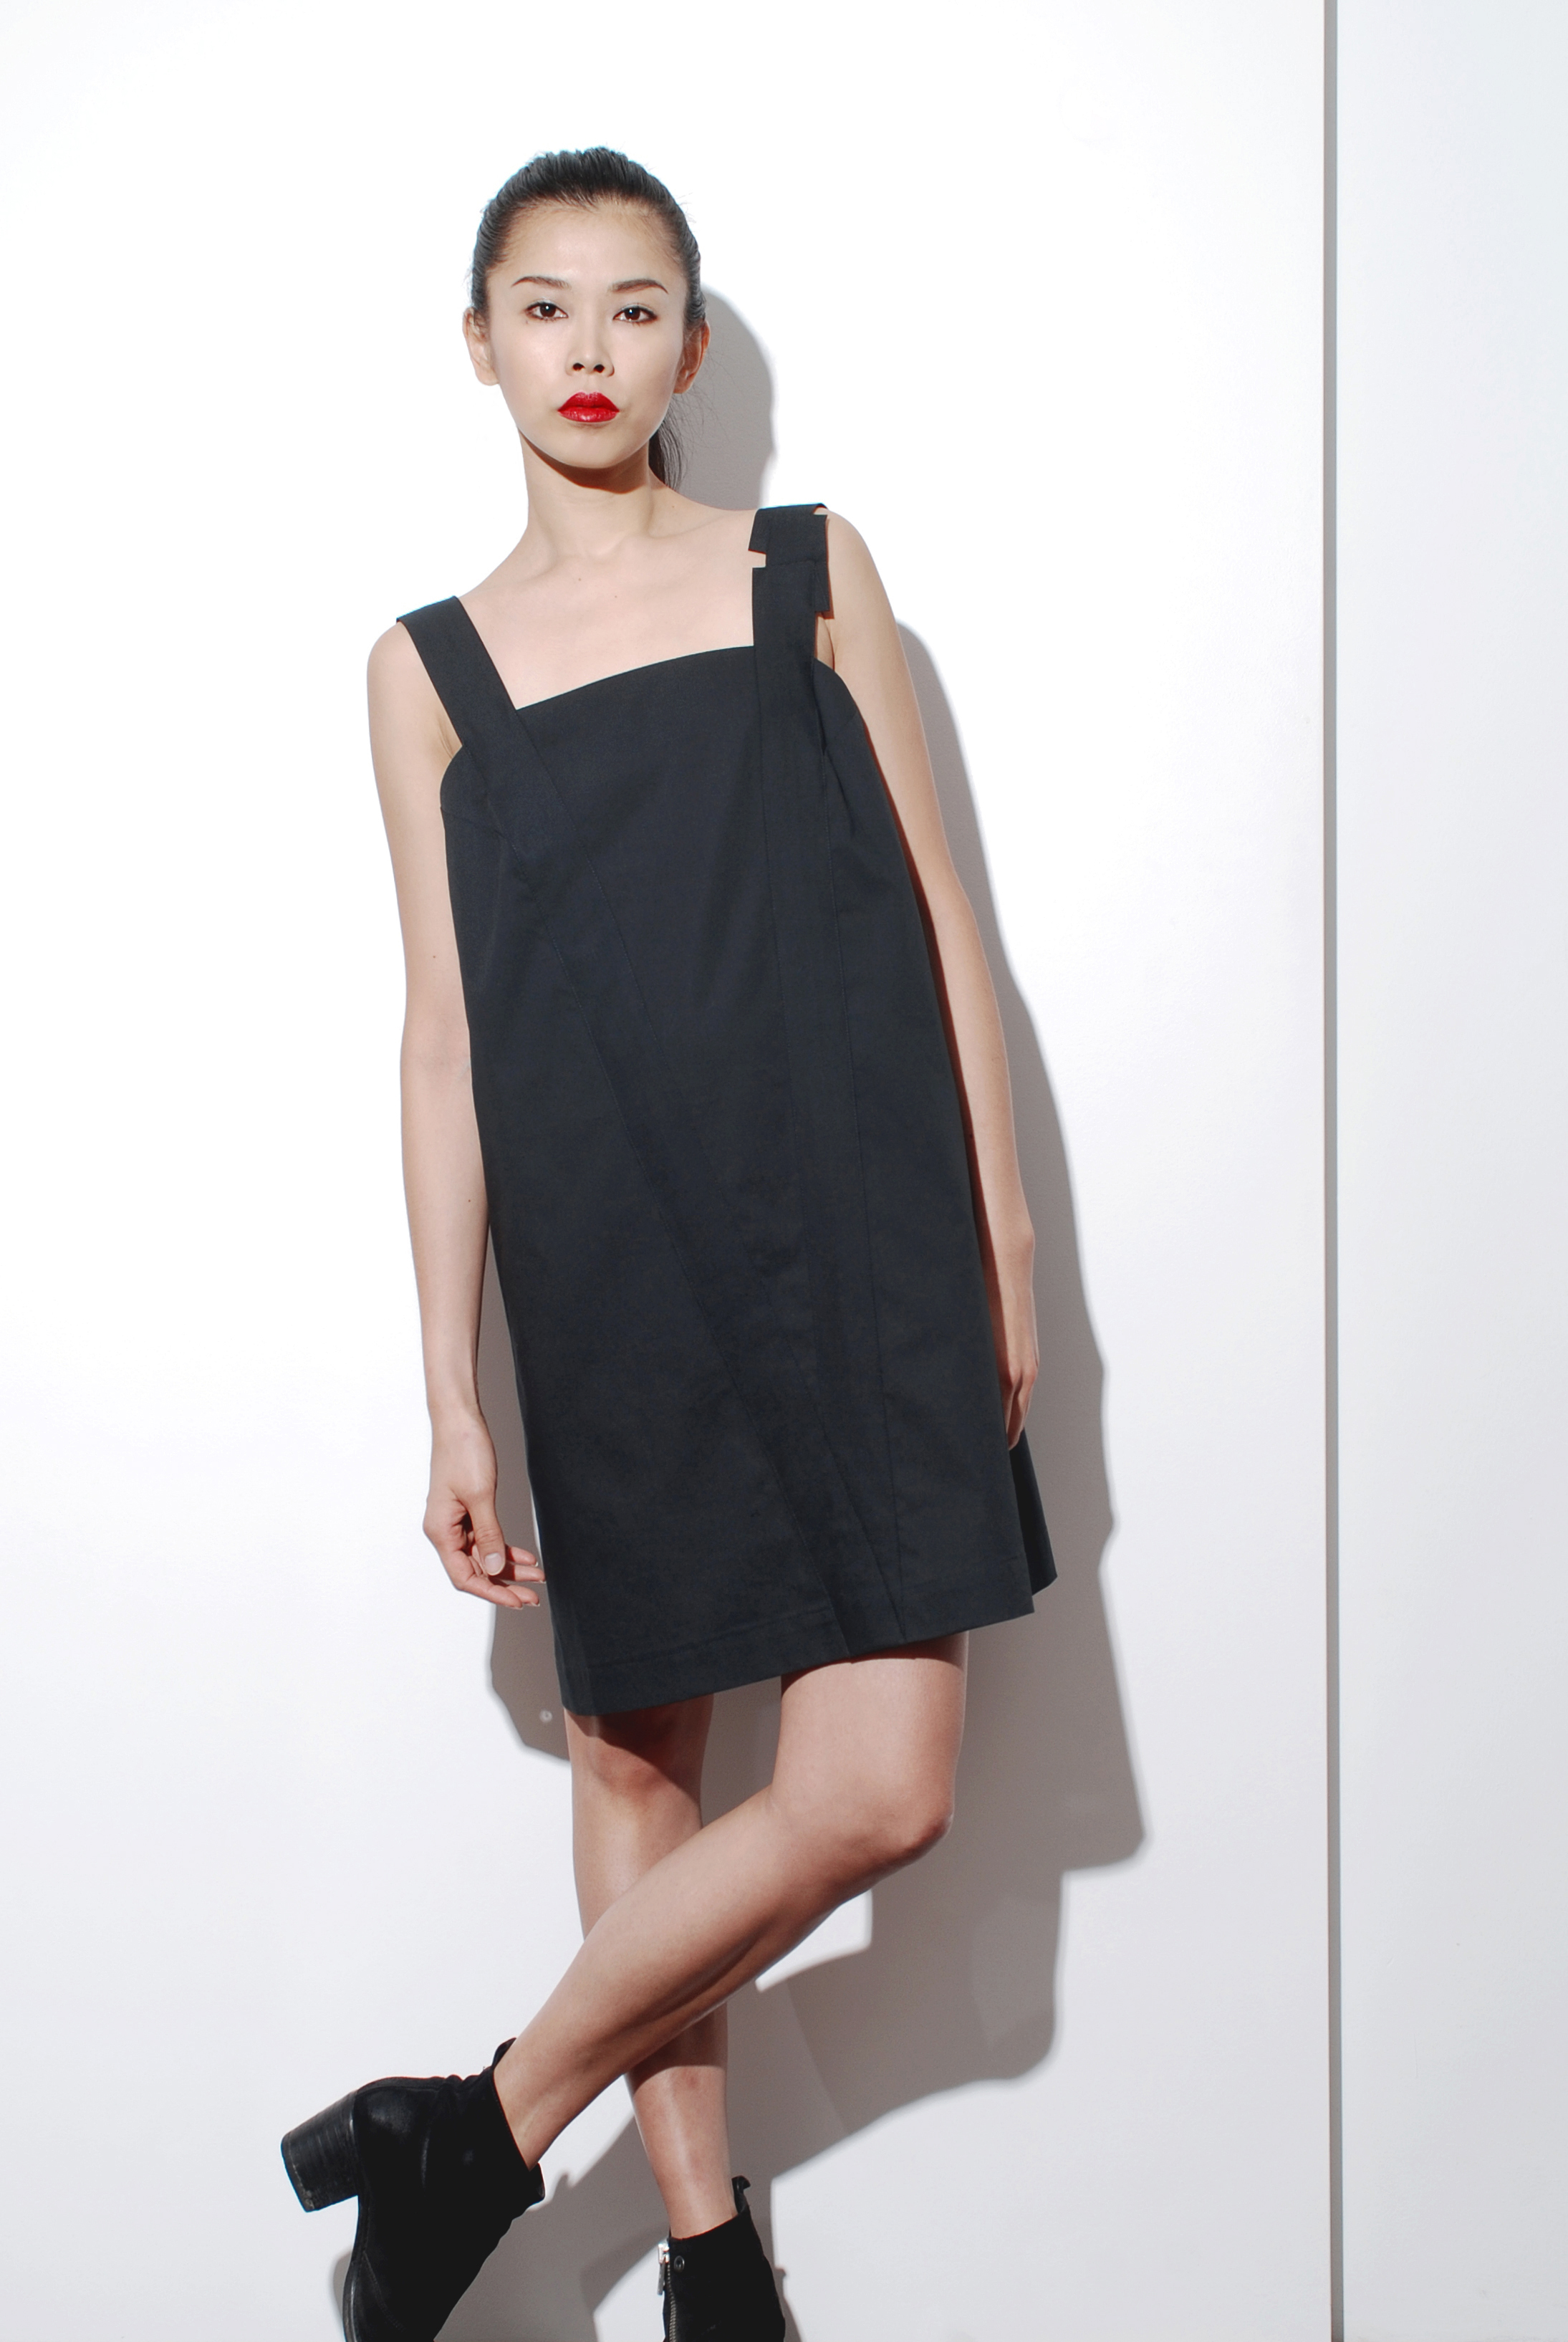 Mayya Saliba_compostable dress.JPG